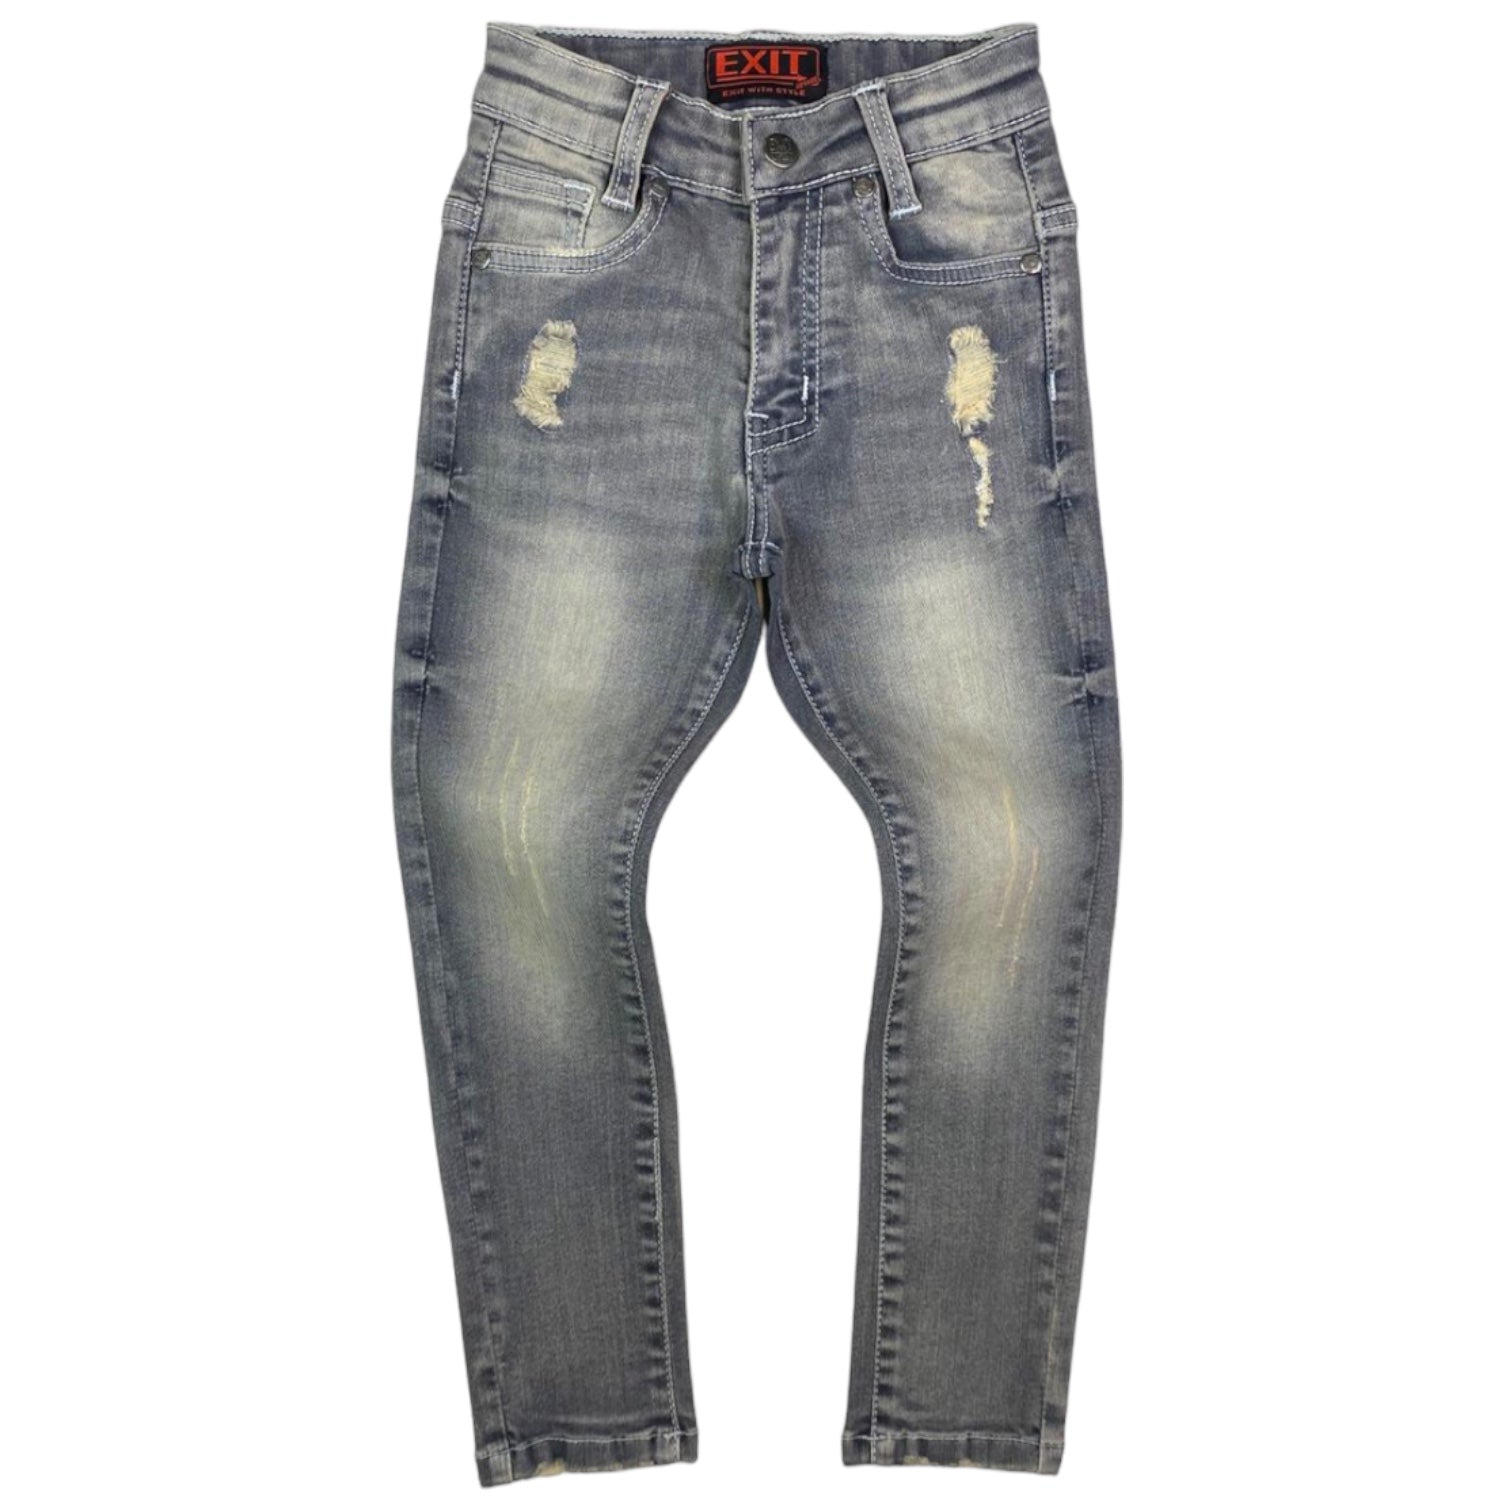 Kids Ex-25004 jeans (Vintage)